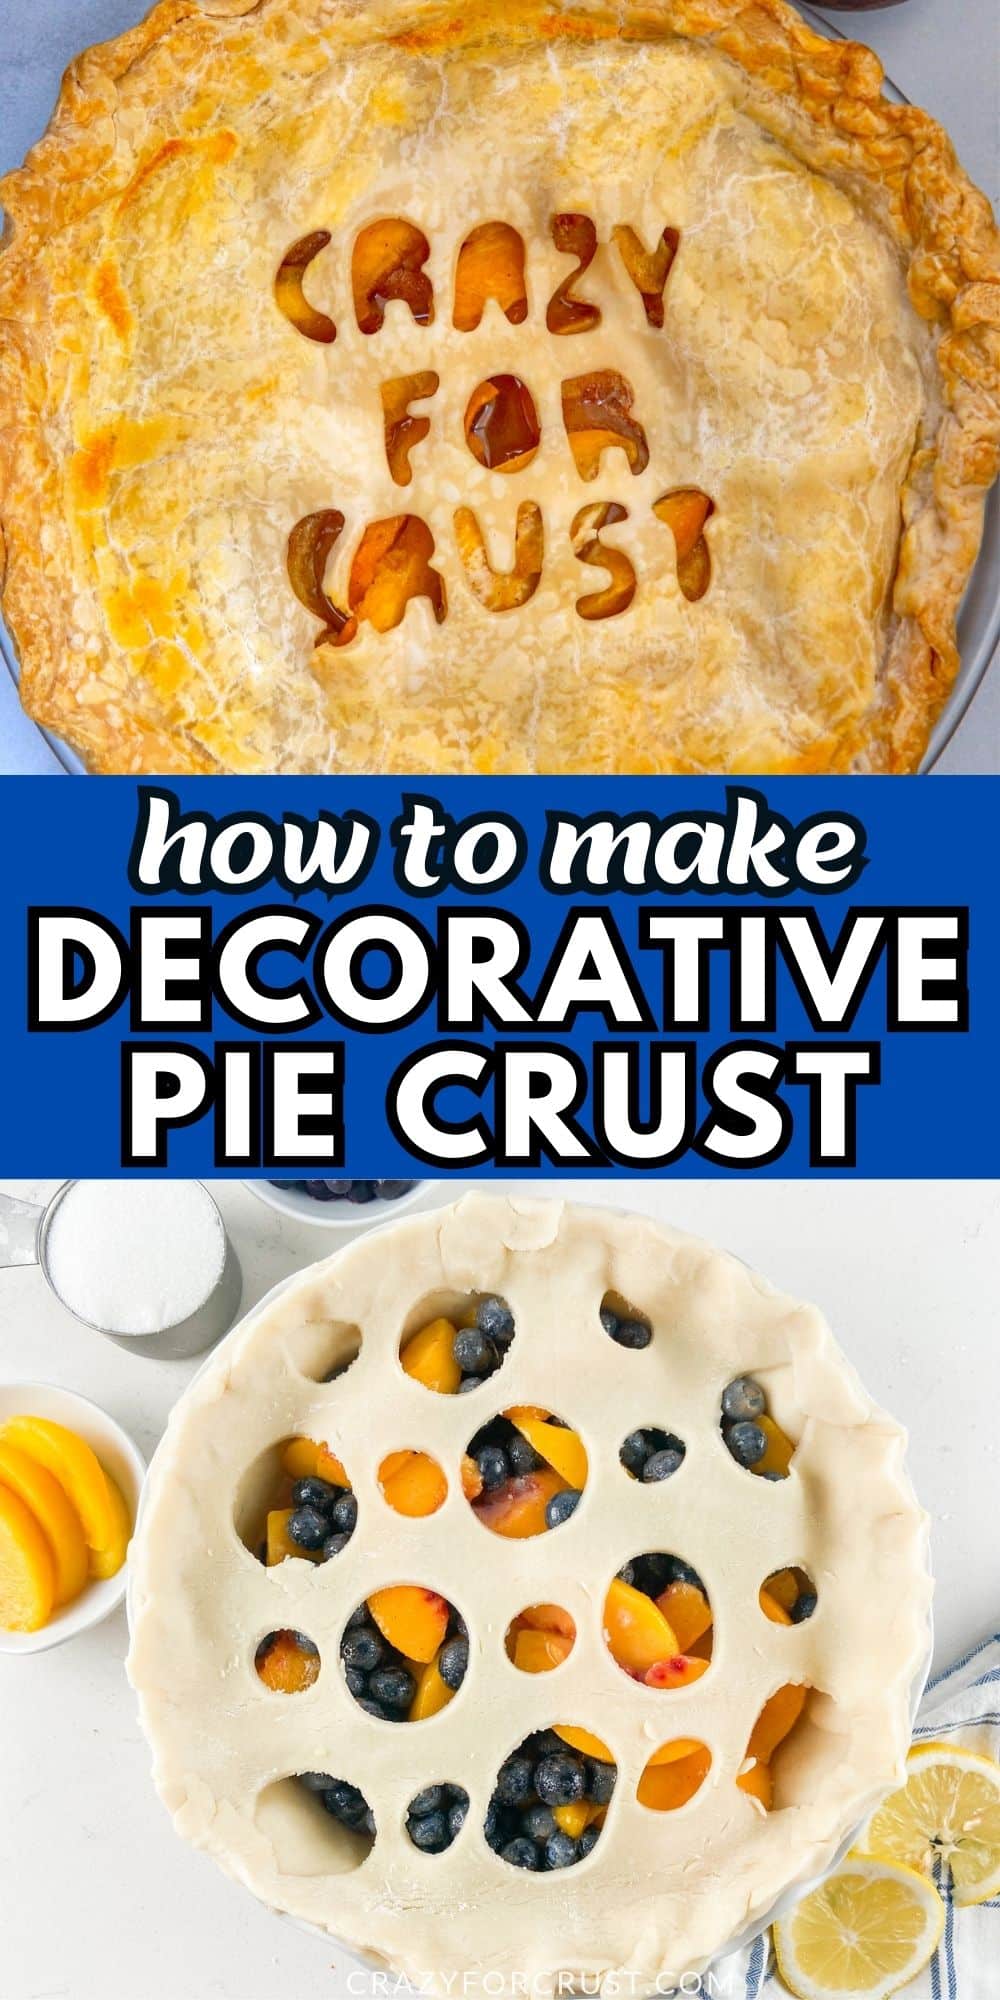 2 photos showing decorative pie crusts